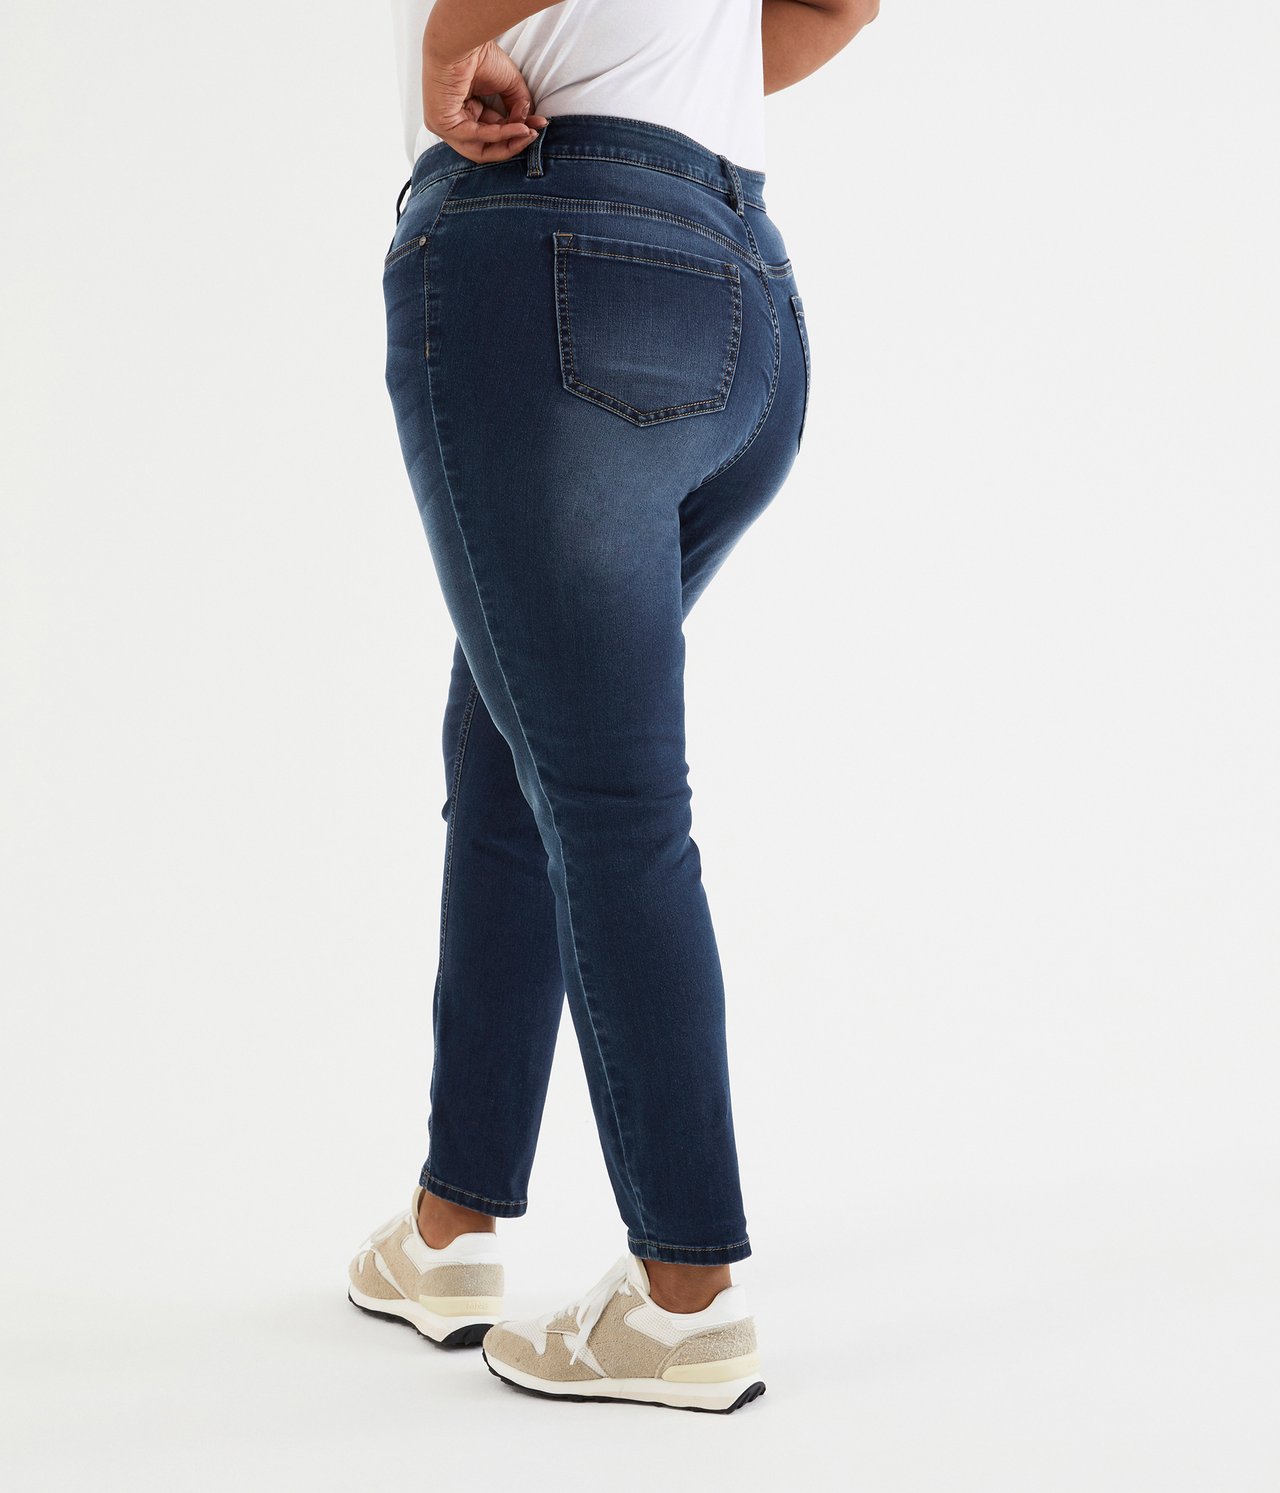 Ebba slim jeans - Tumma denimi - 182cm / Storlek: 50 - 4